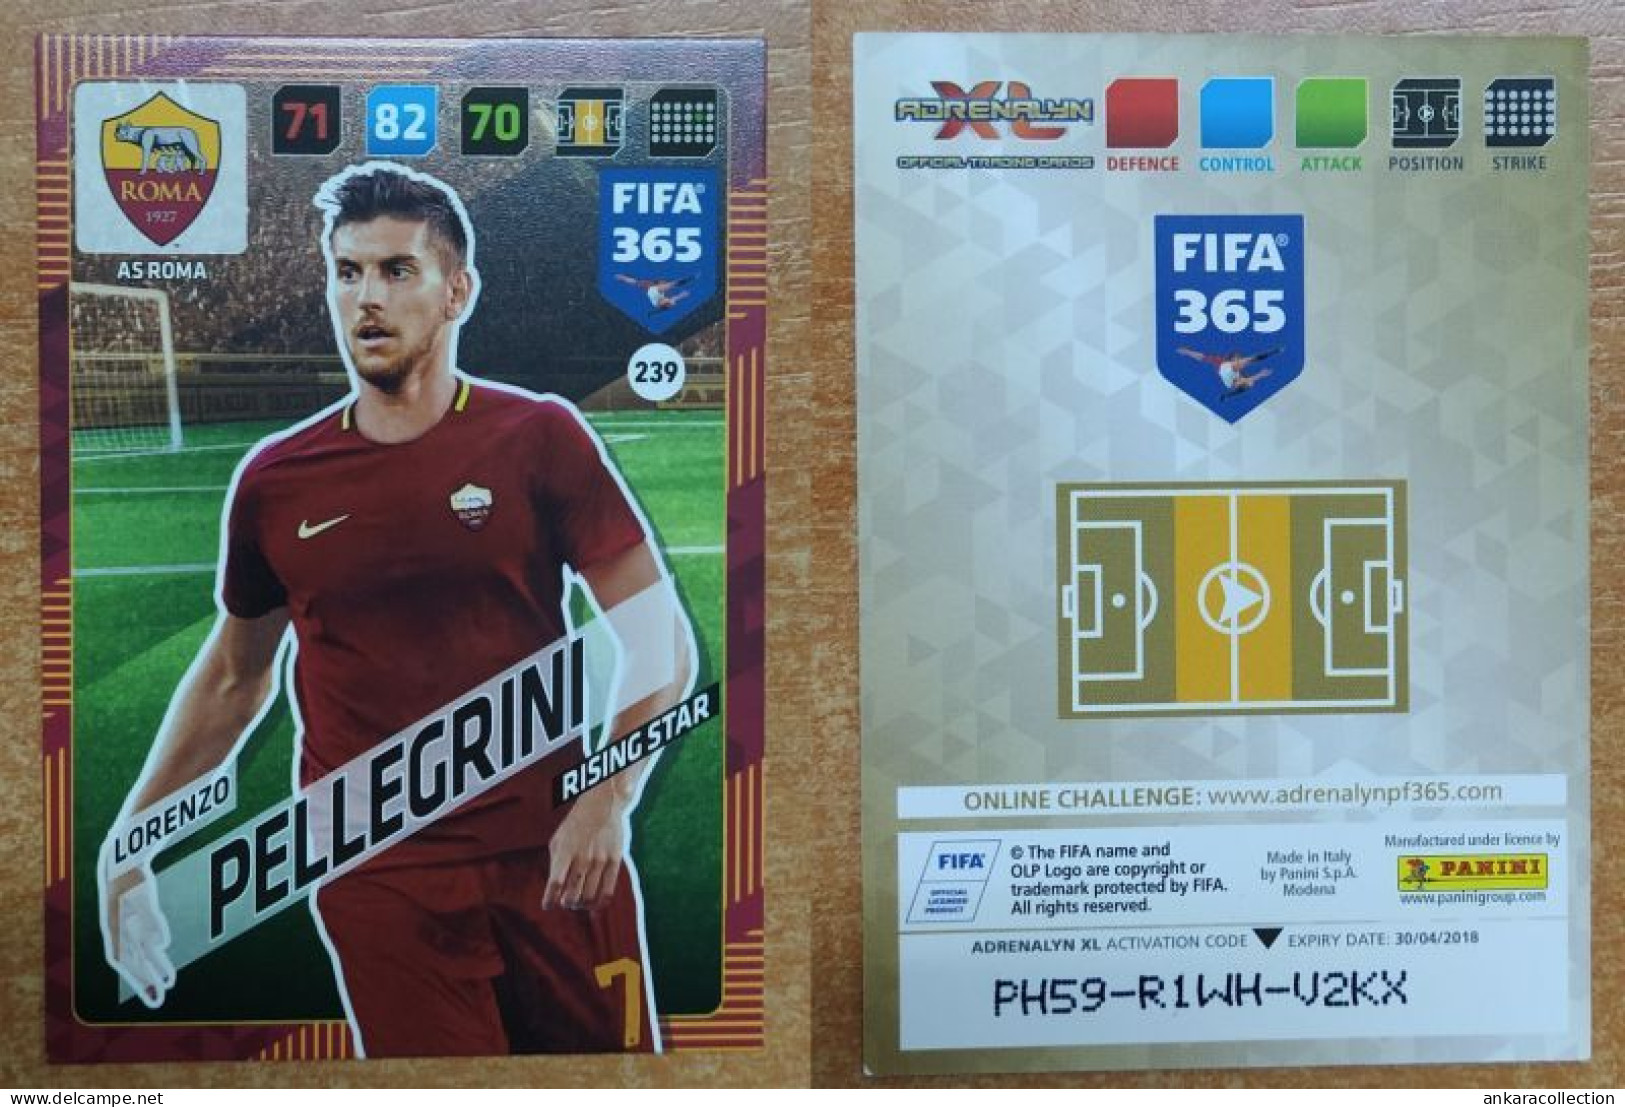 AC - 239 LORENZO PELLEGRINI  AS ROMA  RISING STAR  FIFA 365 PANINI 2018 ADRENALYN TRADING CARD - Trading-Karten